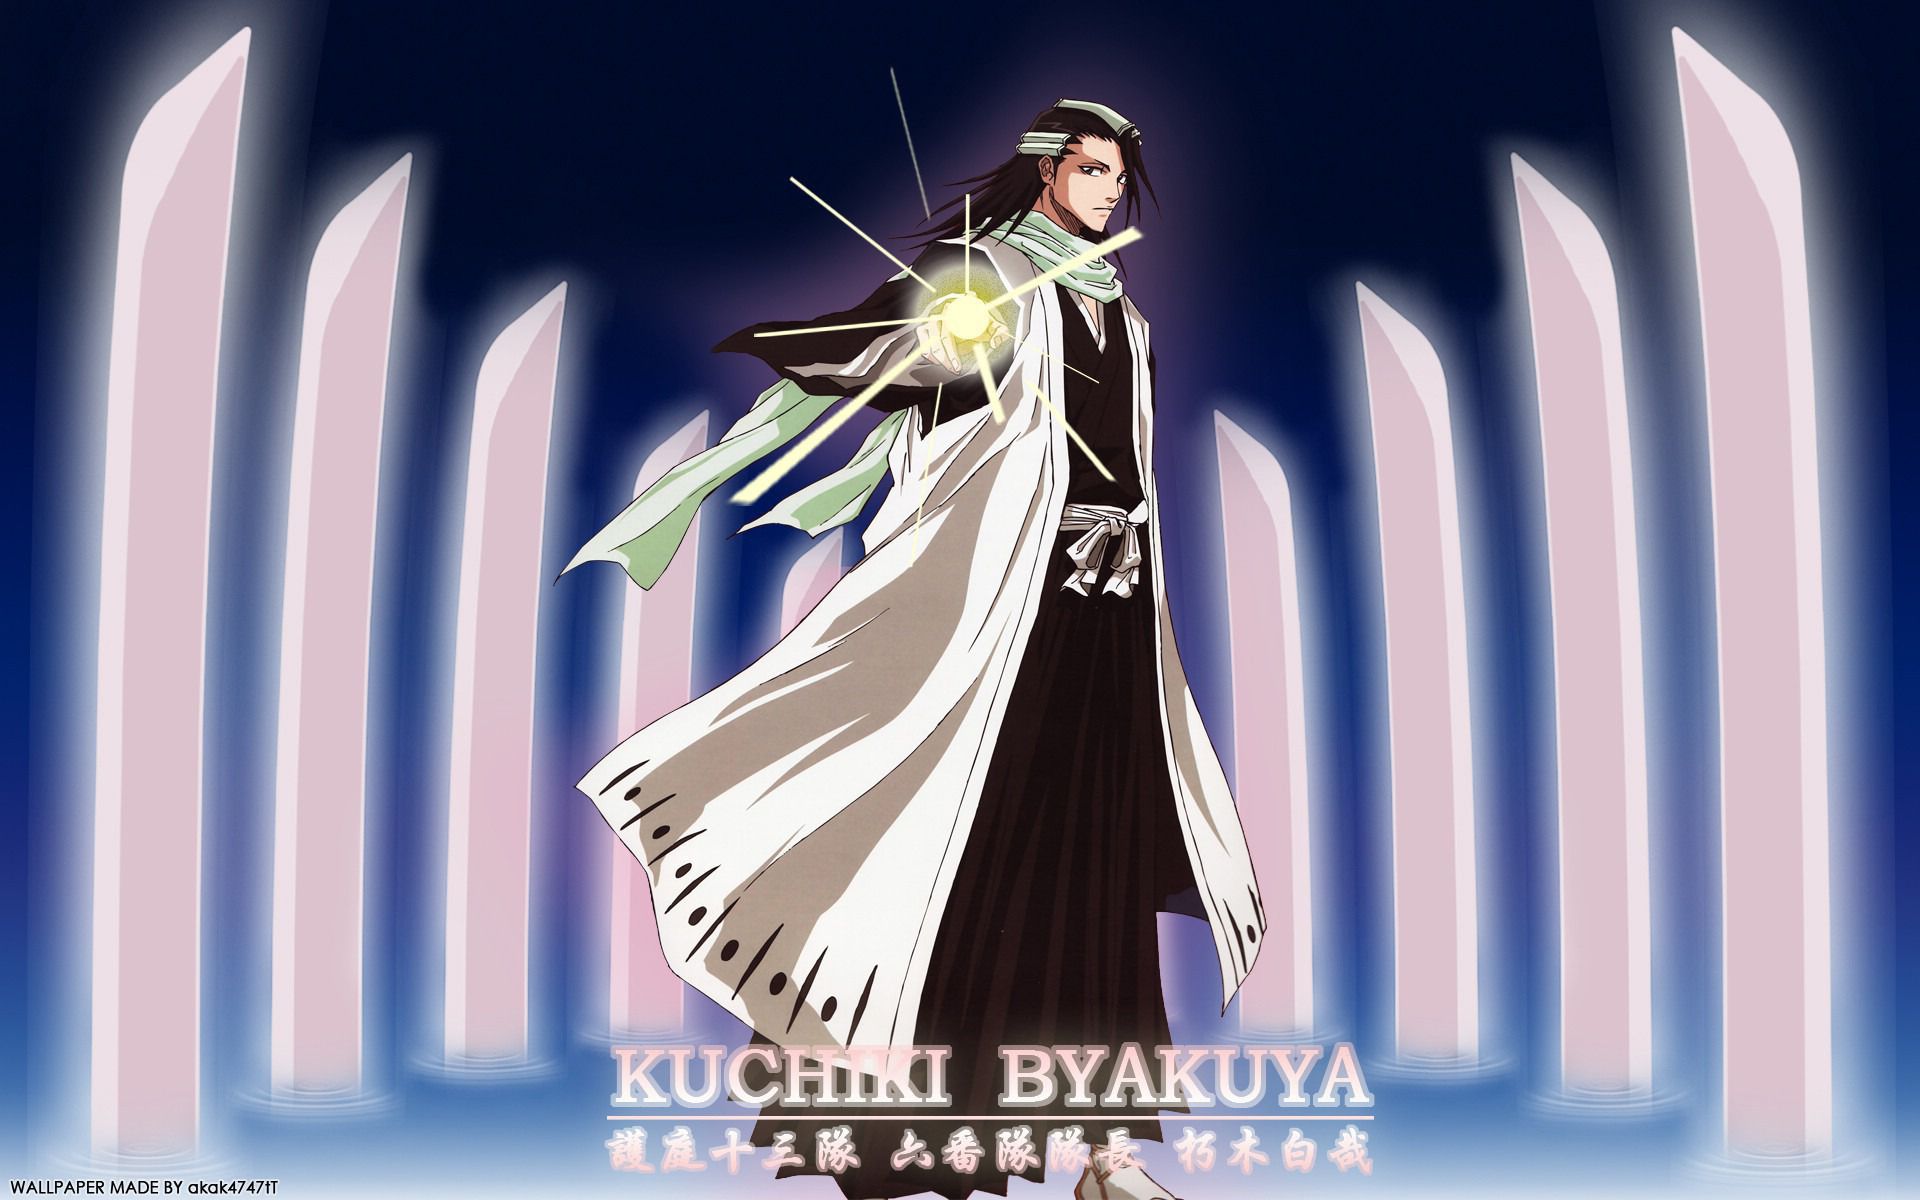 Download Byakuya Kuchiki wallpapers for mobile phone free Byakuya  Kuchiki HD pictures